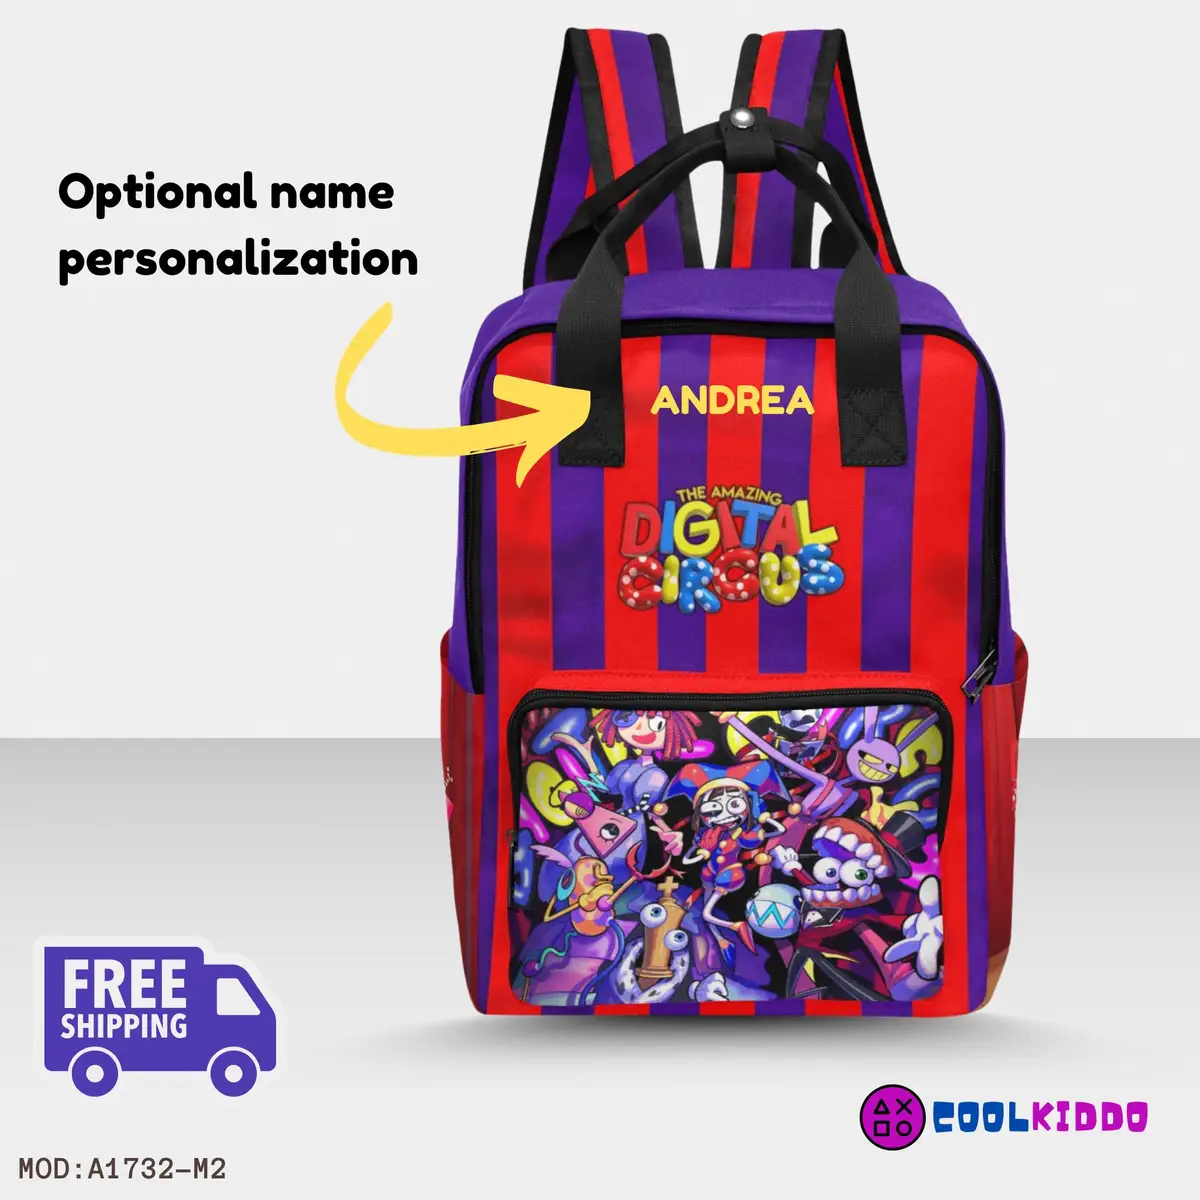 Amazing Digital Circus Handle Backpack. Book bag for Kids / Youth Cool Kiddo 14